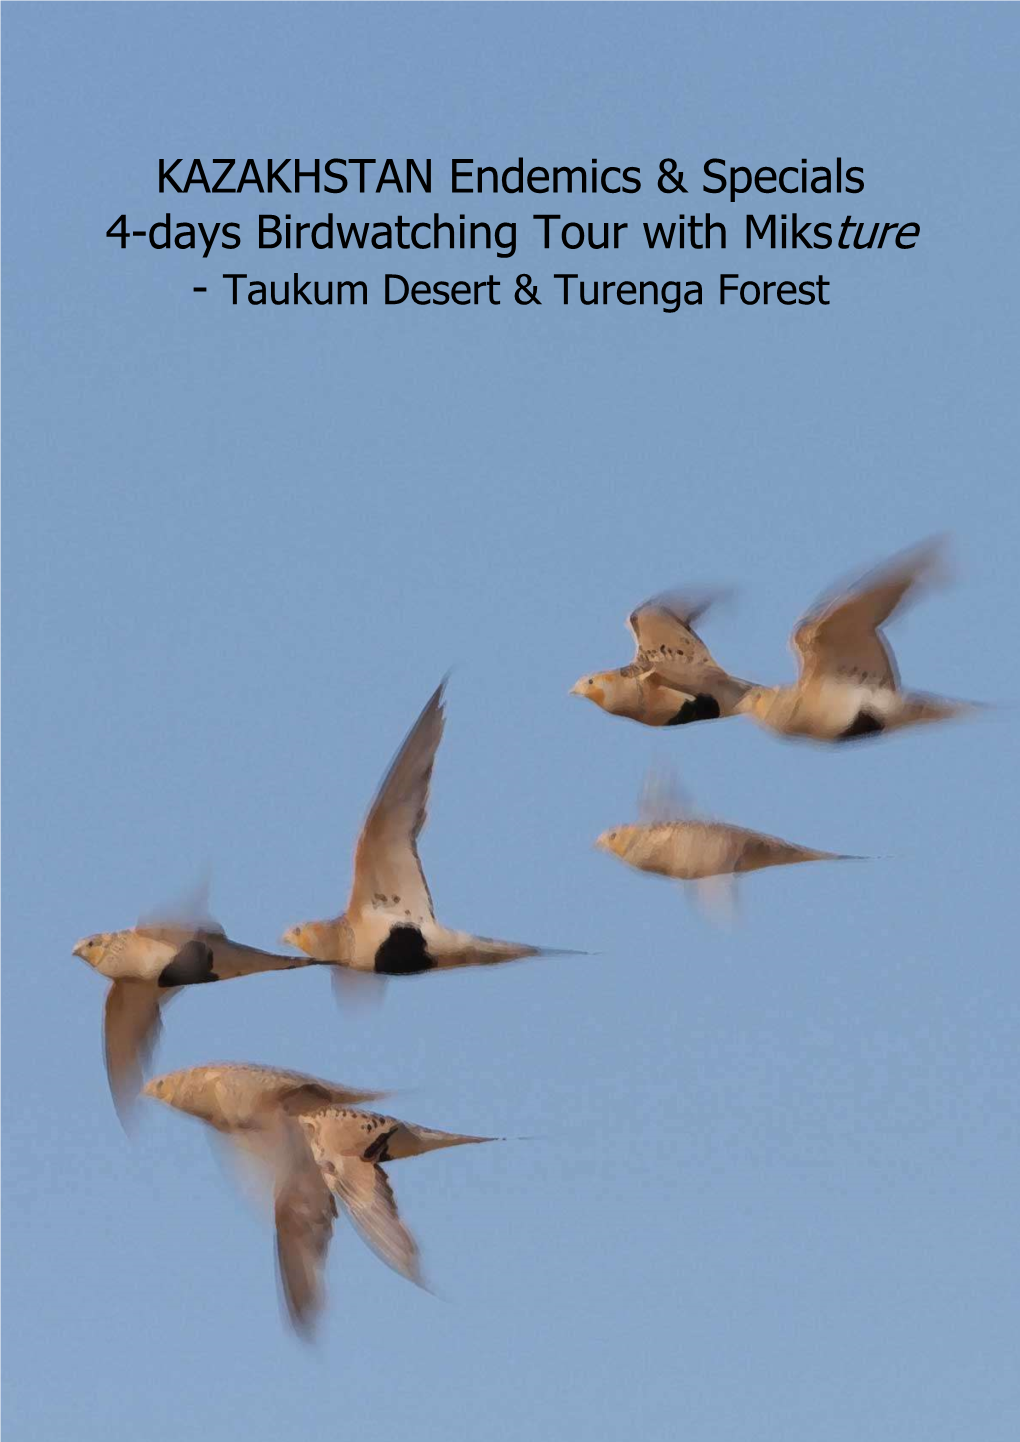 KAZAKHSTAN Endemics & Specials 4-Days Birdwatching Tour with Miksture